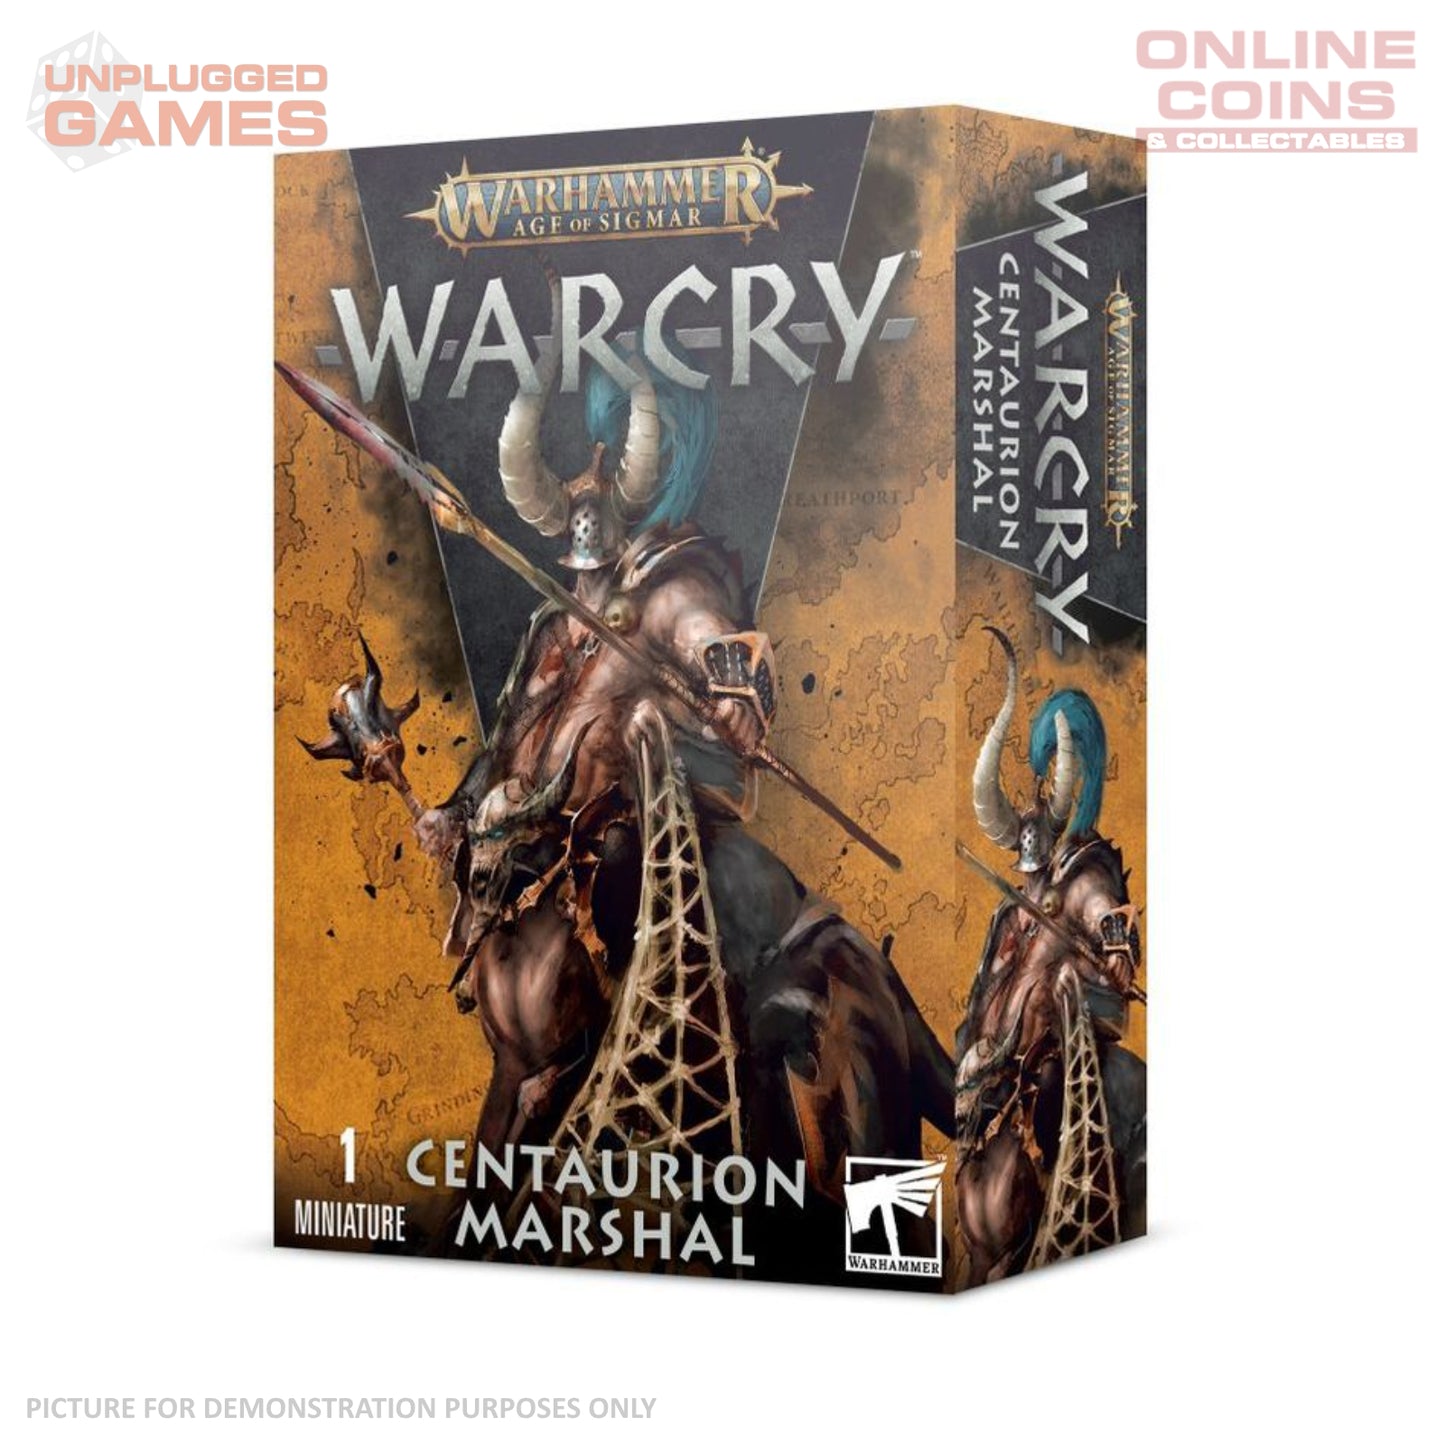 Warhammer Age of Sigmar - Warcry Centaurion Marshal